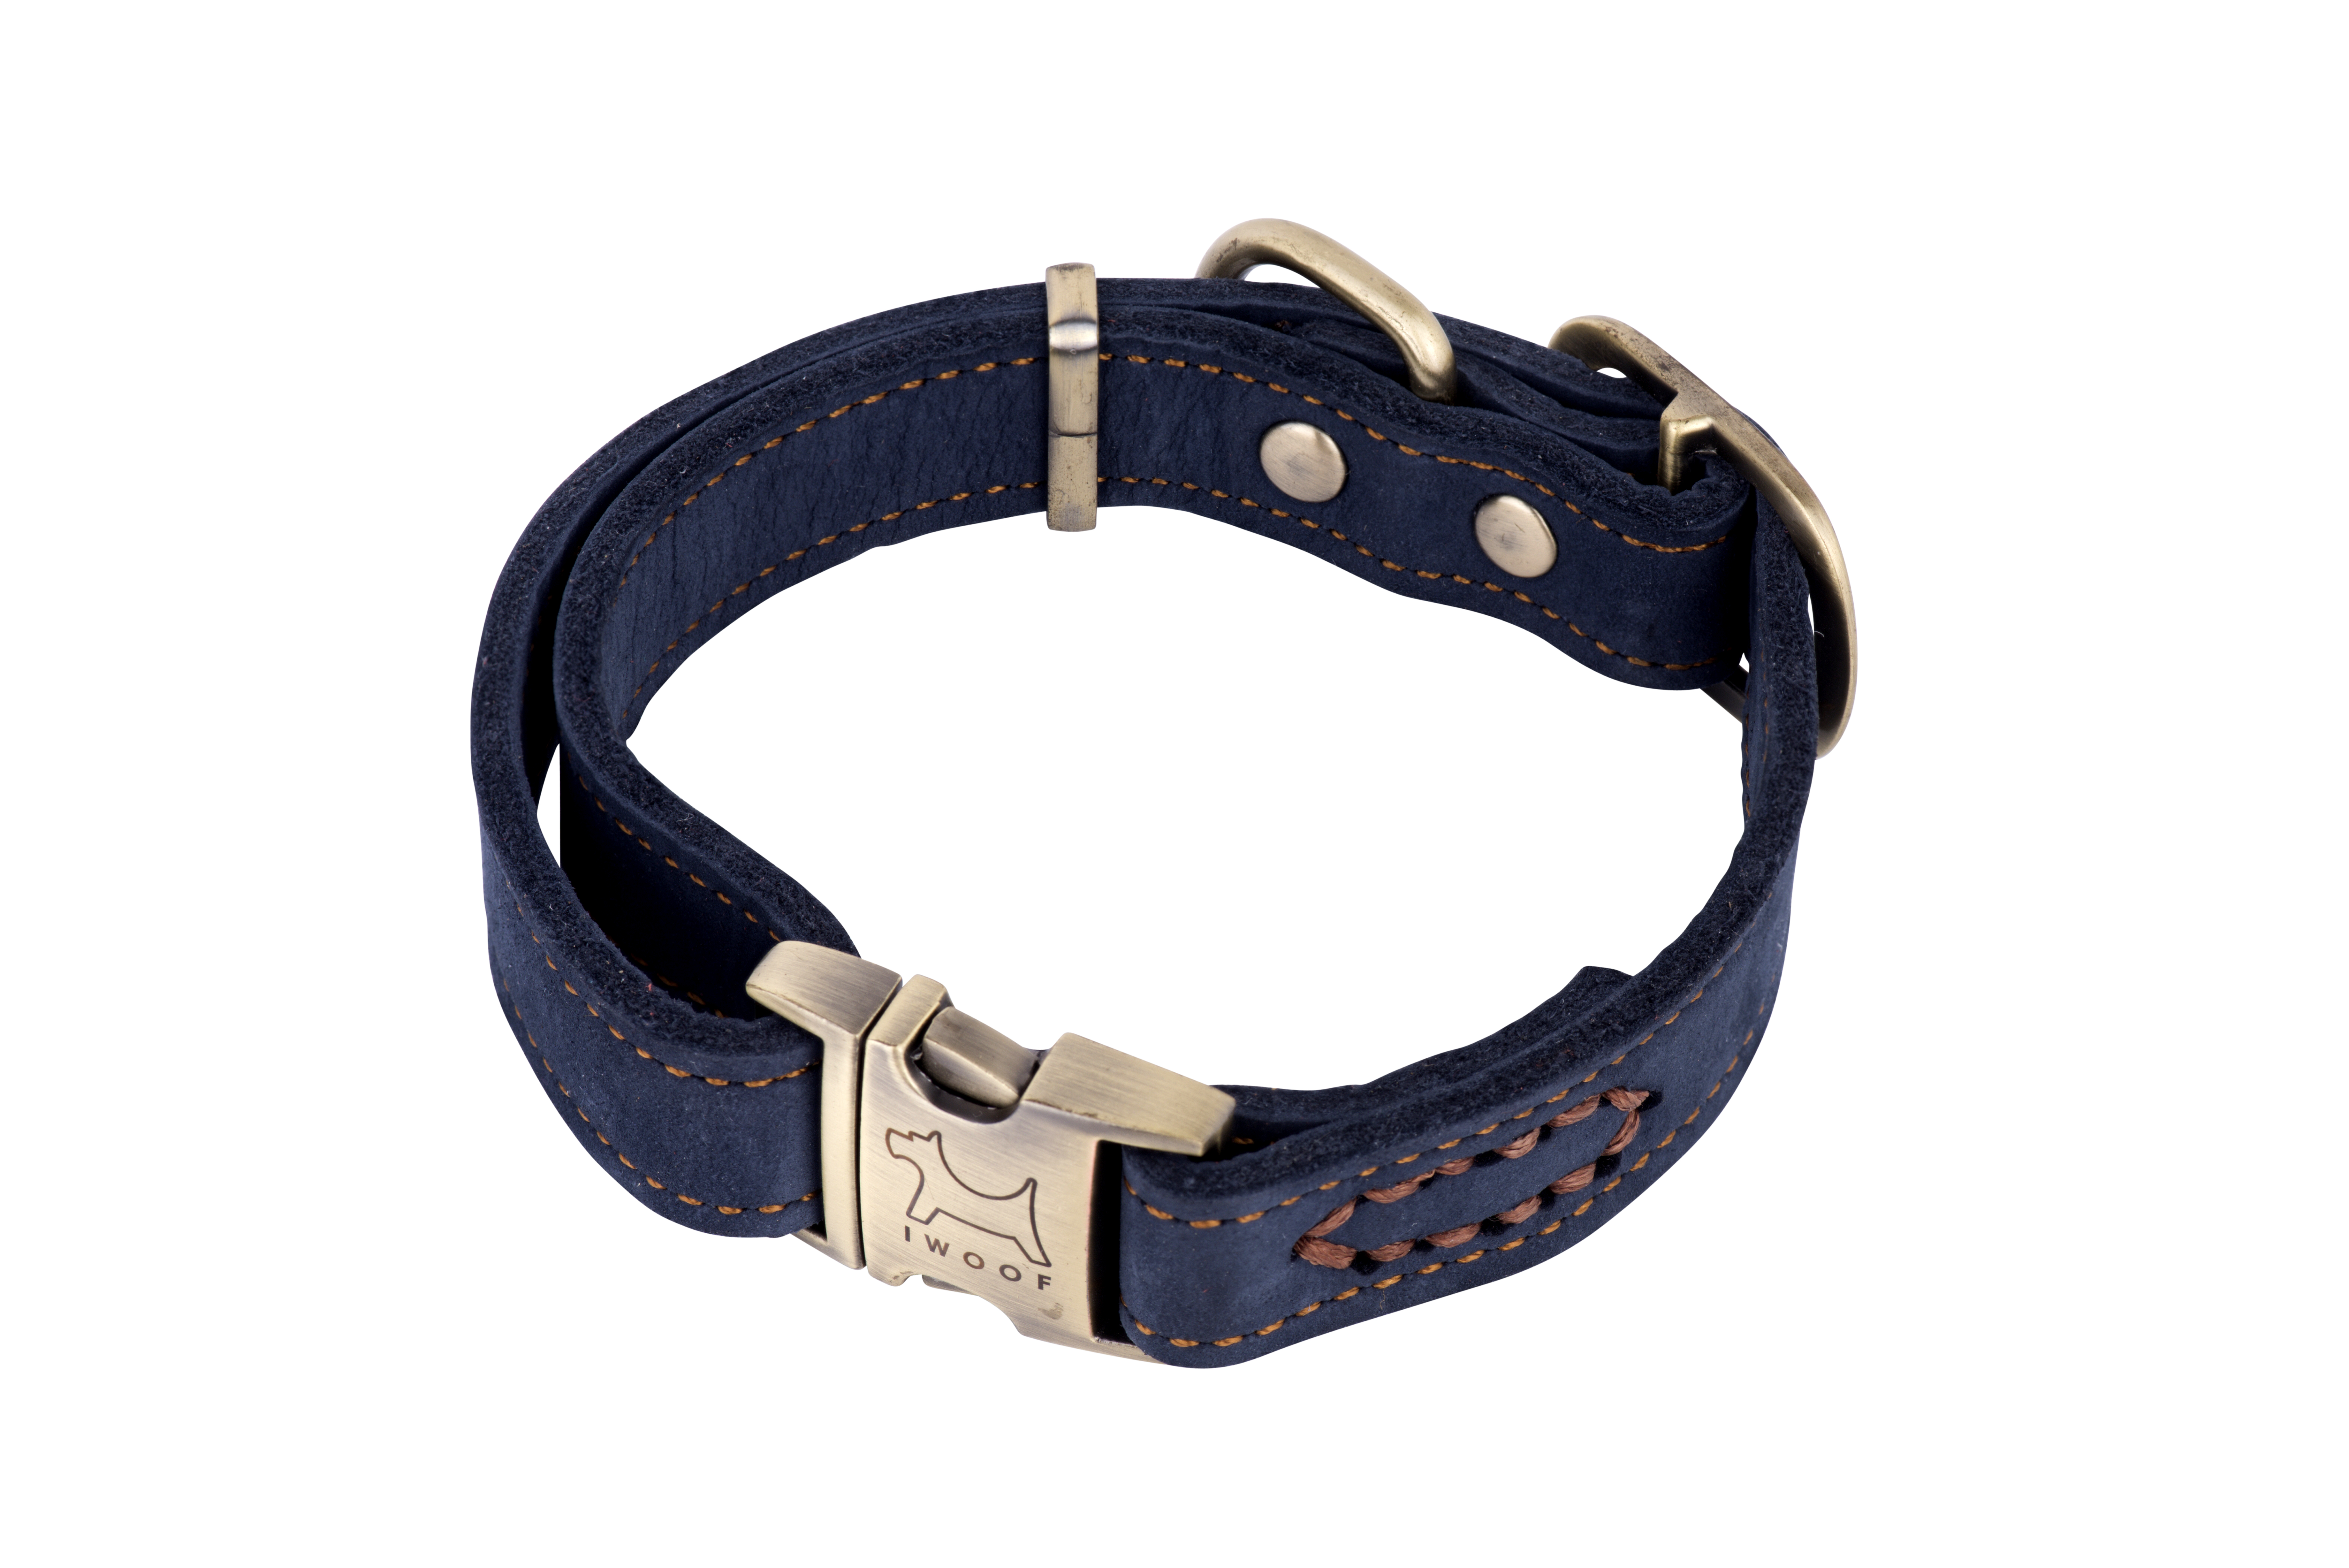 Royal Blue designer leather dog collar by IWOOF